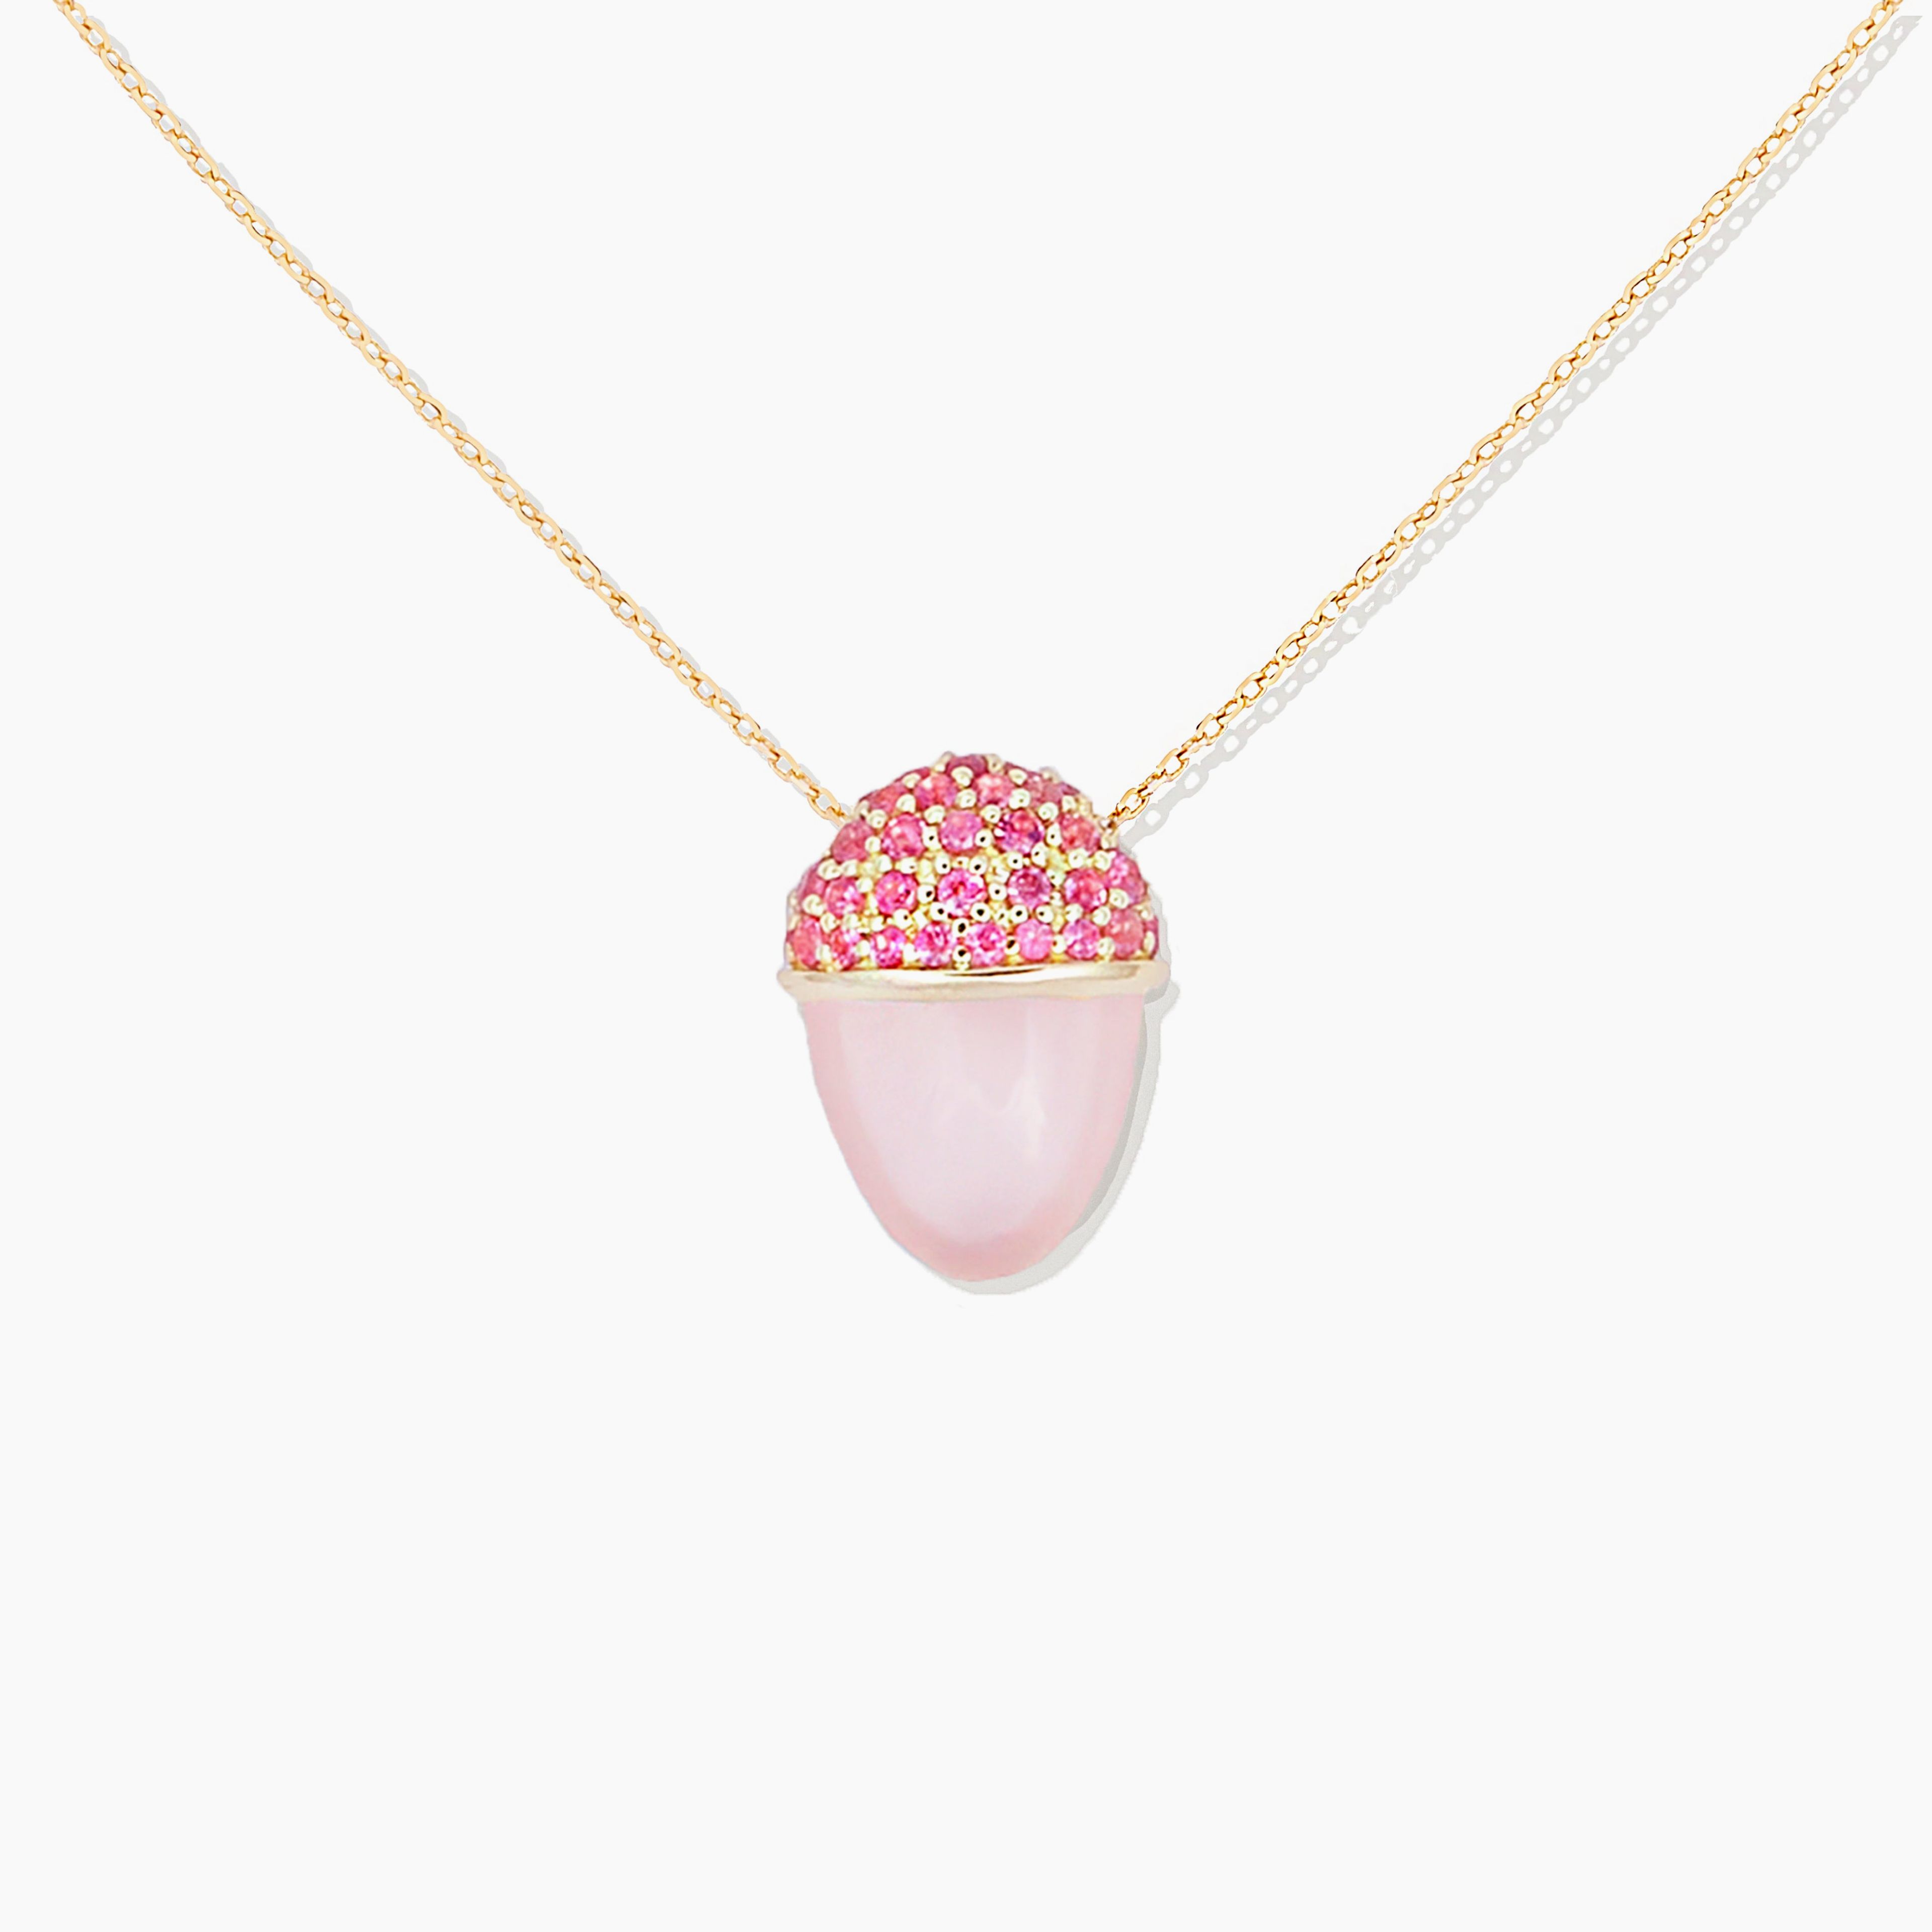 Found Cap Pendant Necklace - Rose Quartz & Pink Sapphire